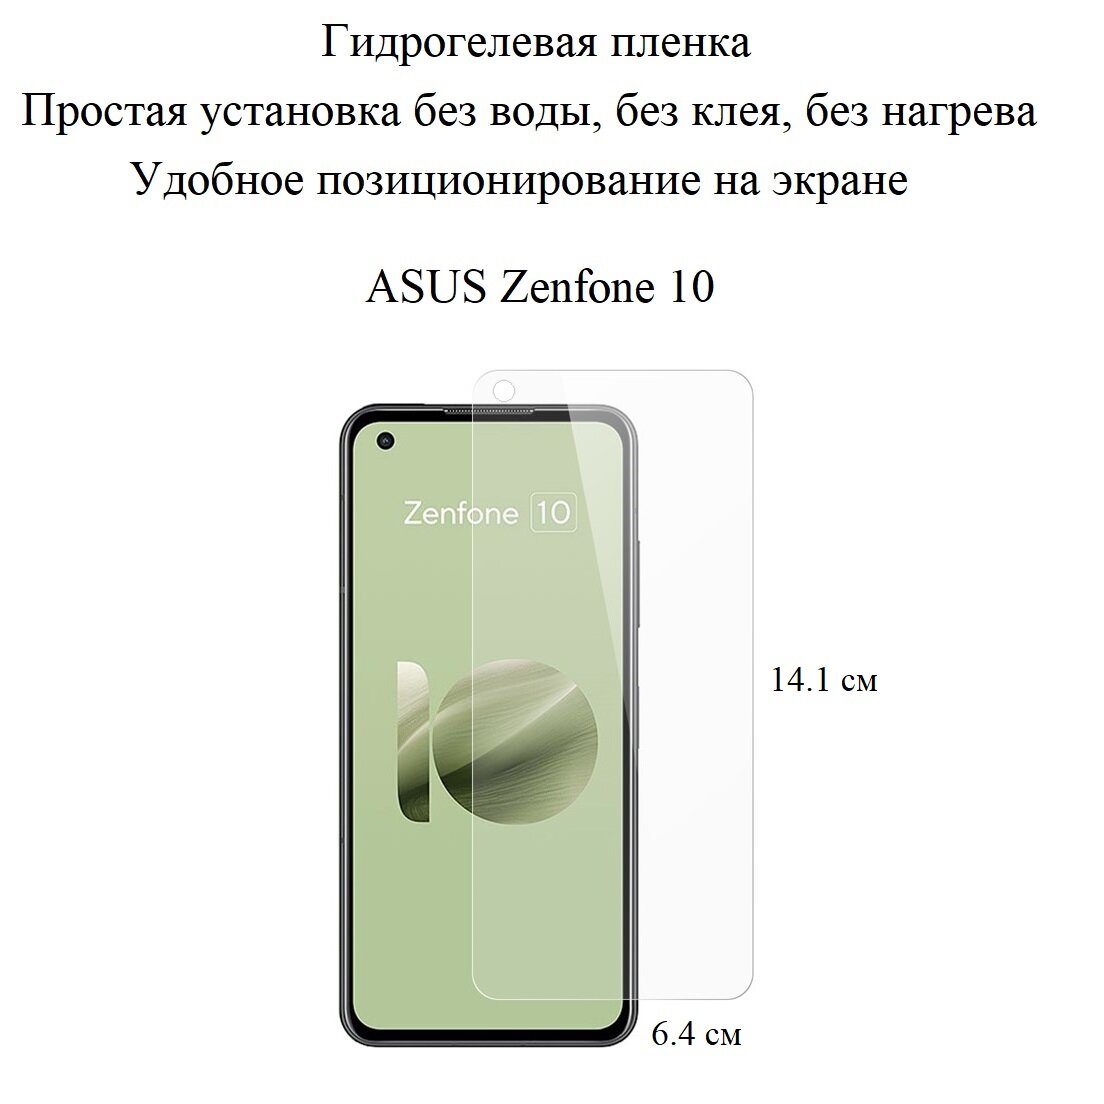 Матовая гидрогелевая пленка hoco. на экран смартфона Asus Zenfone 10